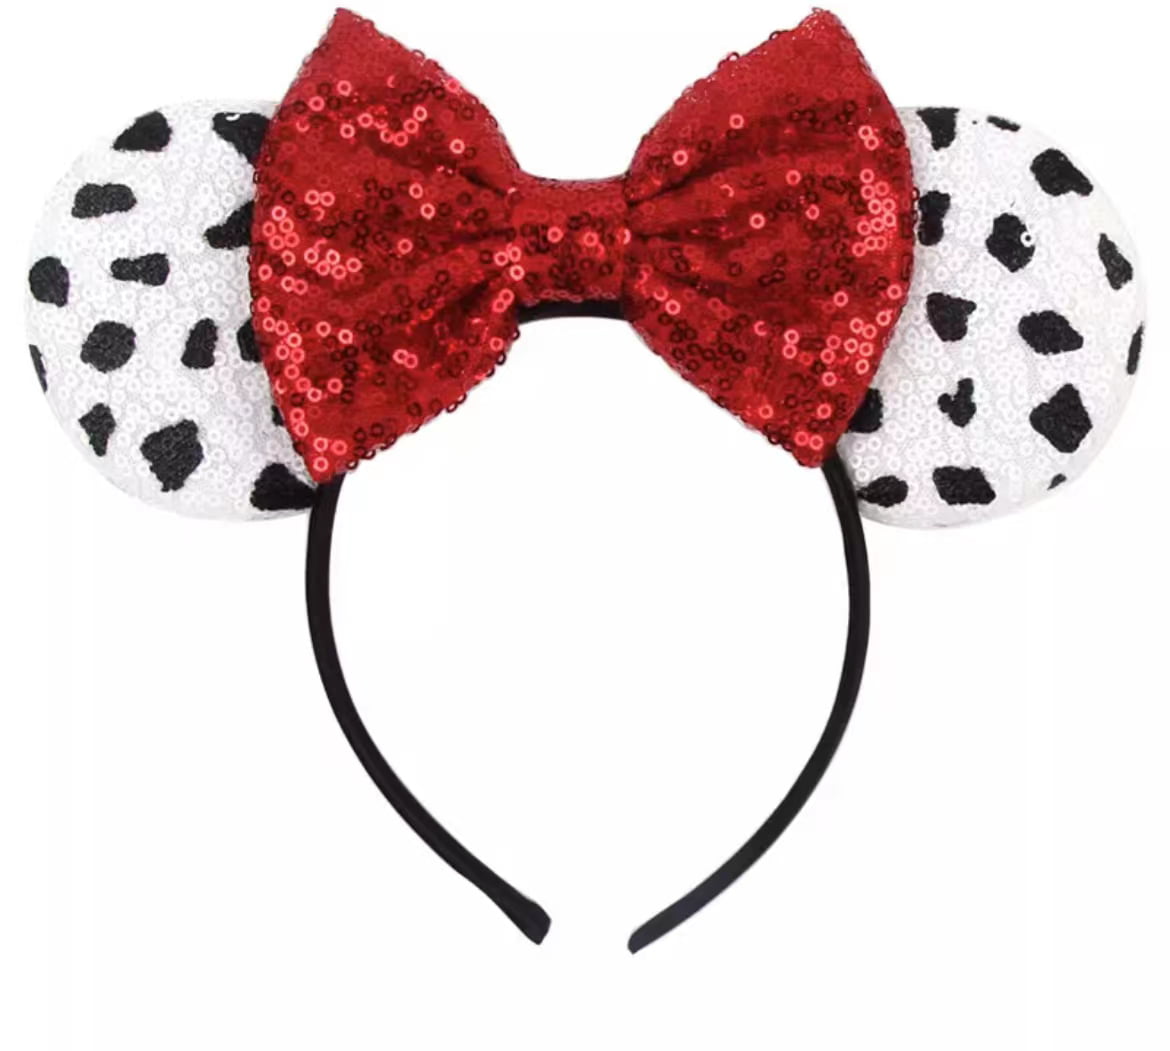 Disneyland Disney World Disney Bounding Disney Trip Accessories Princess Costume Sequin Red Polka Dot Minnie Ears Black & White